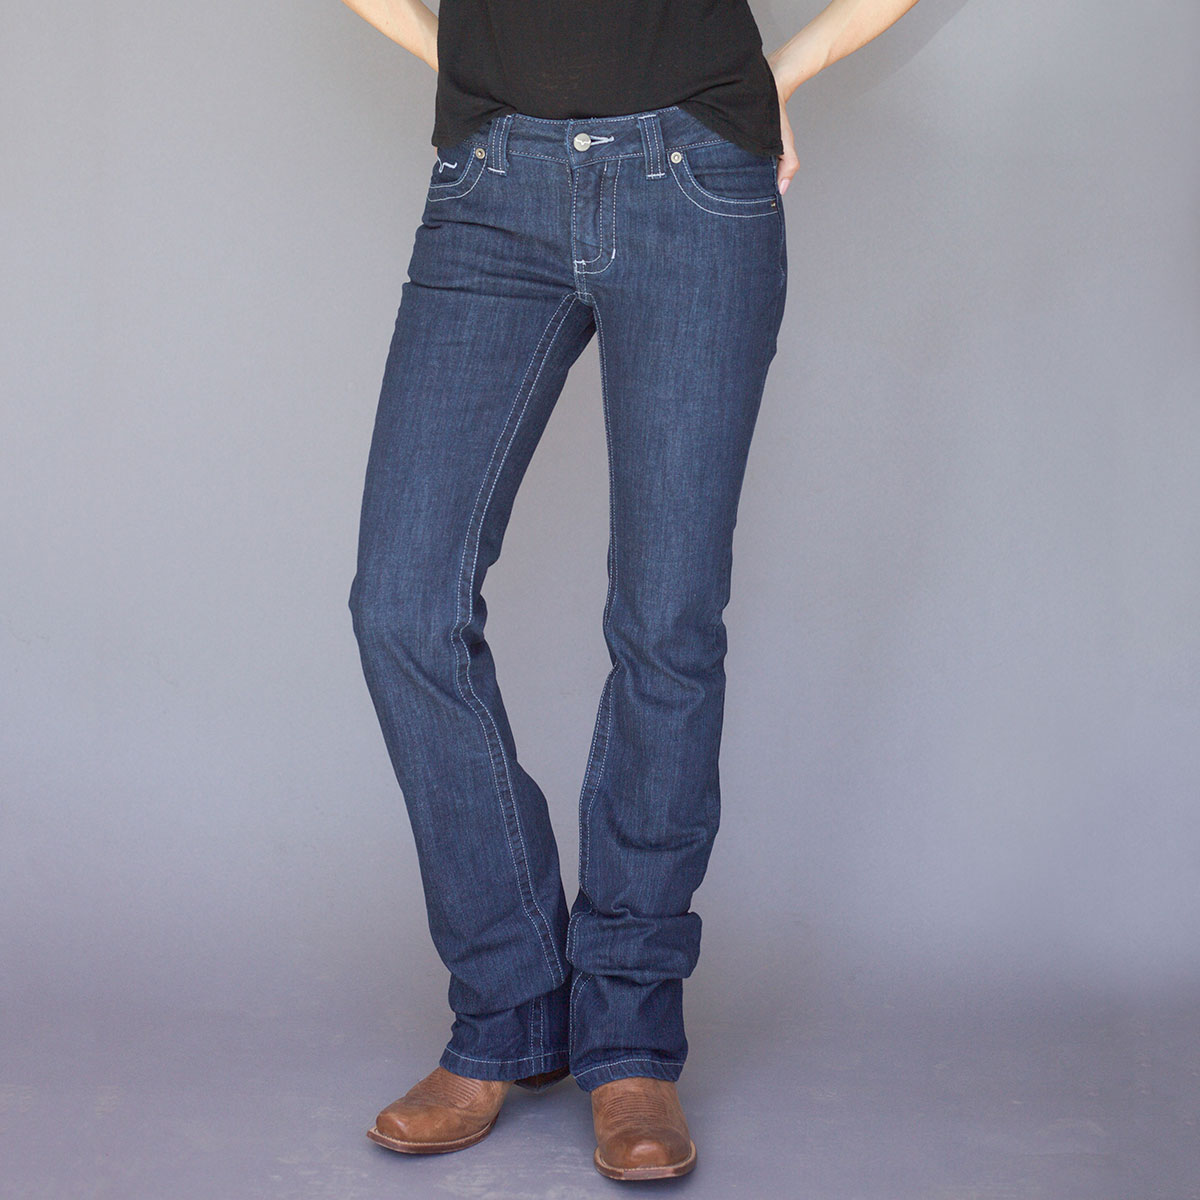 kimes ranch jeans womens